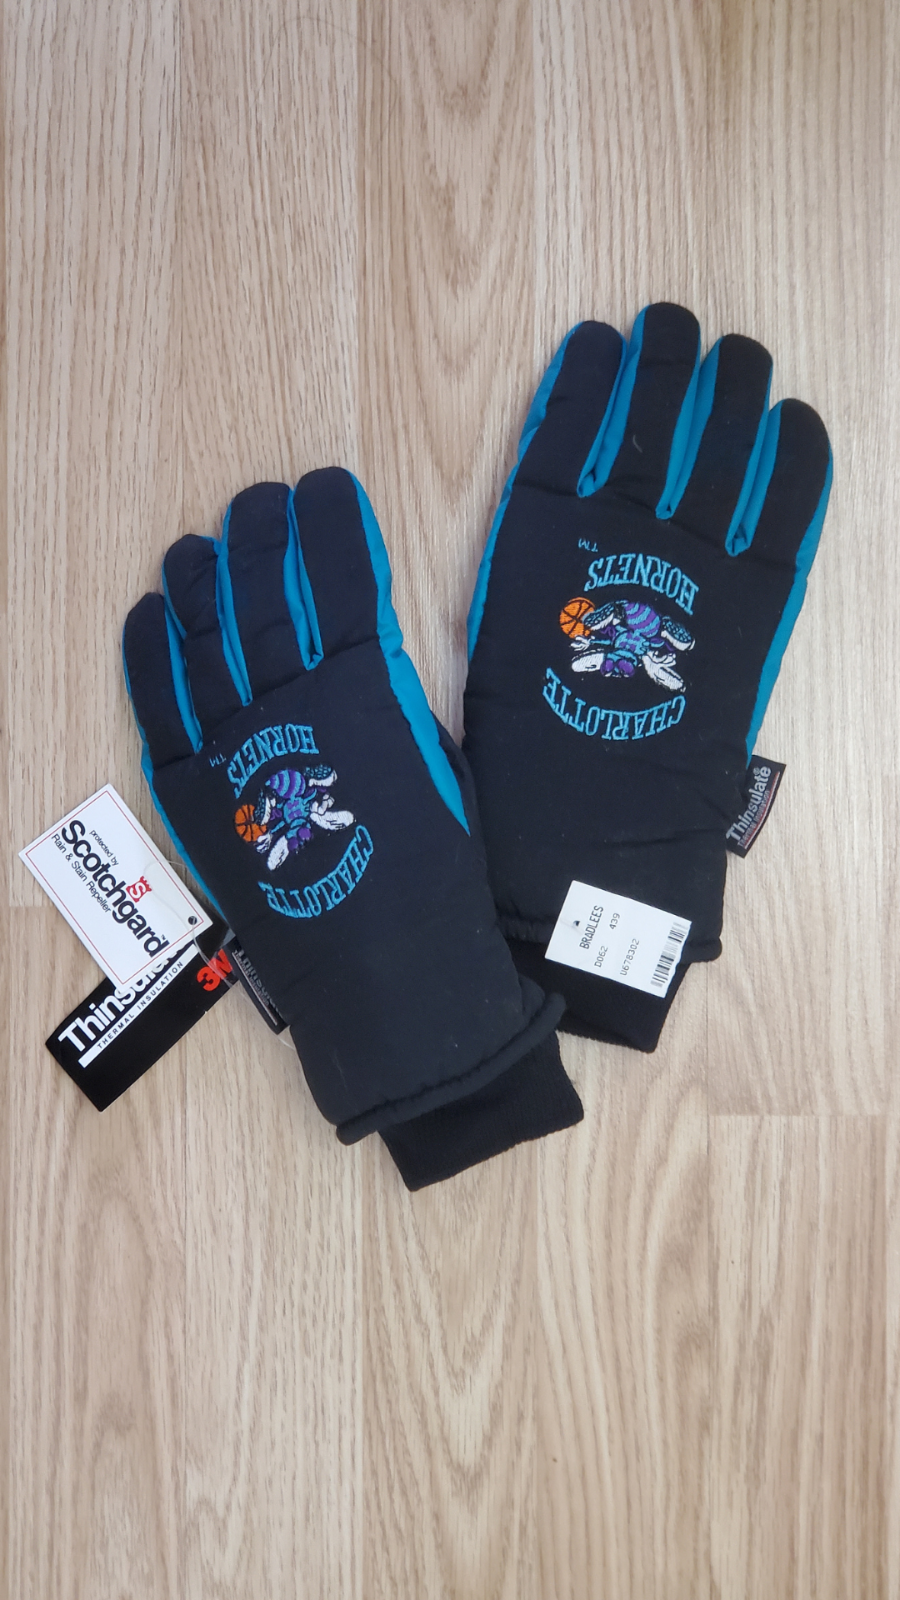 Mens NEW Charlotte Hornets Winter Gloves Fits Large